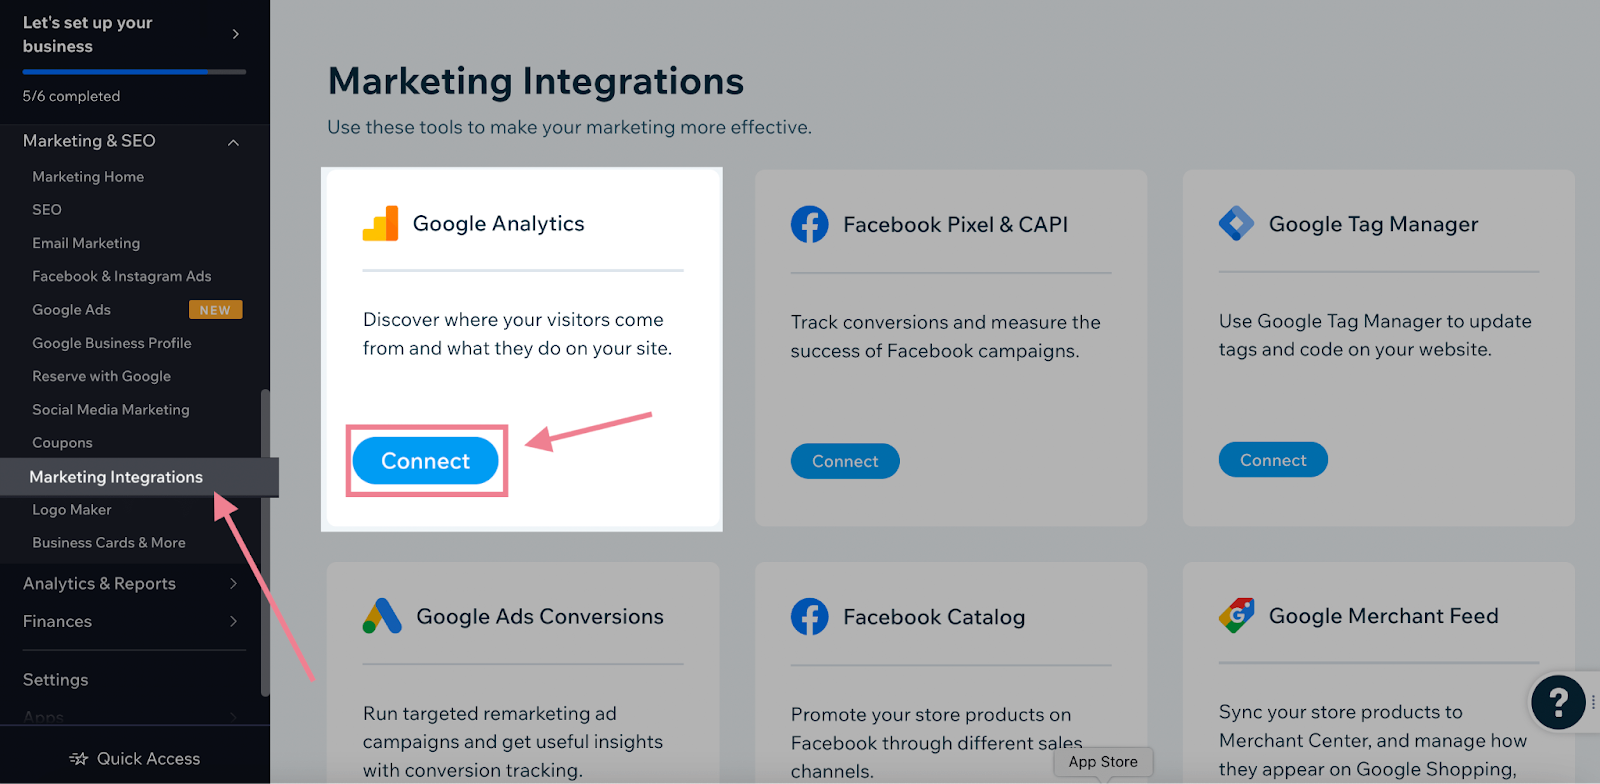 Connect Google Analytics under Marketing Integrations